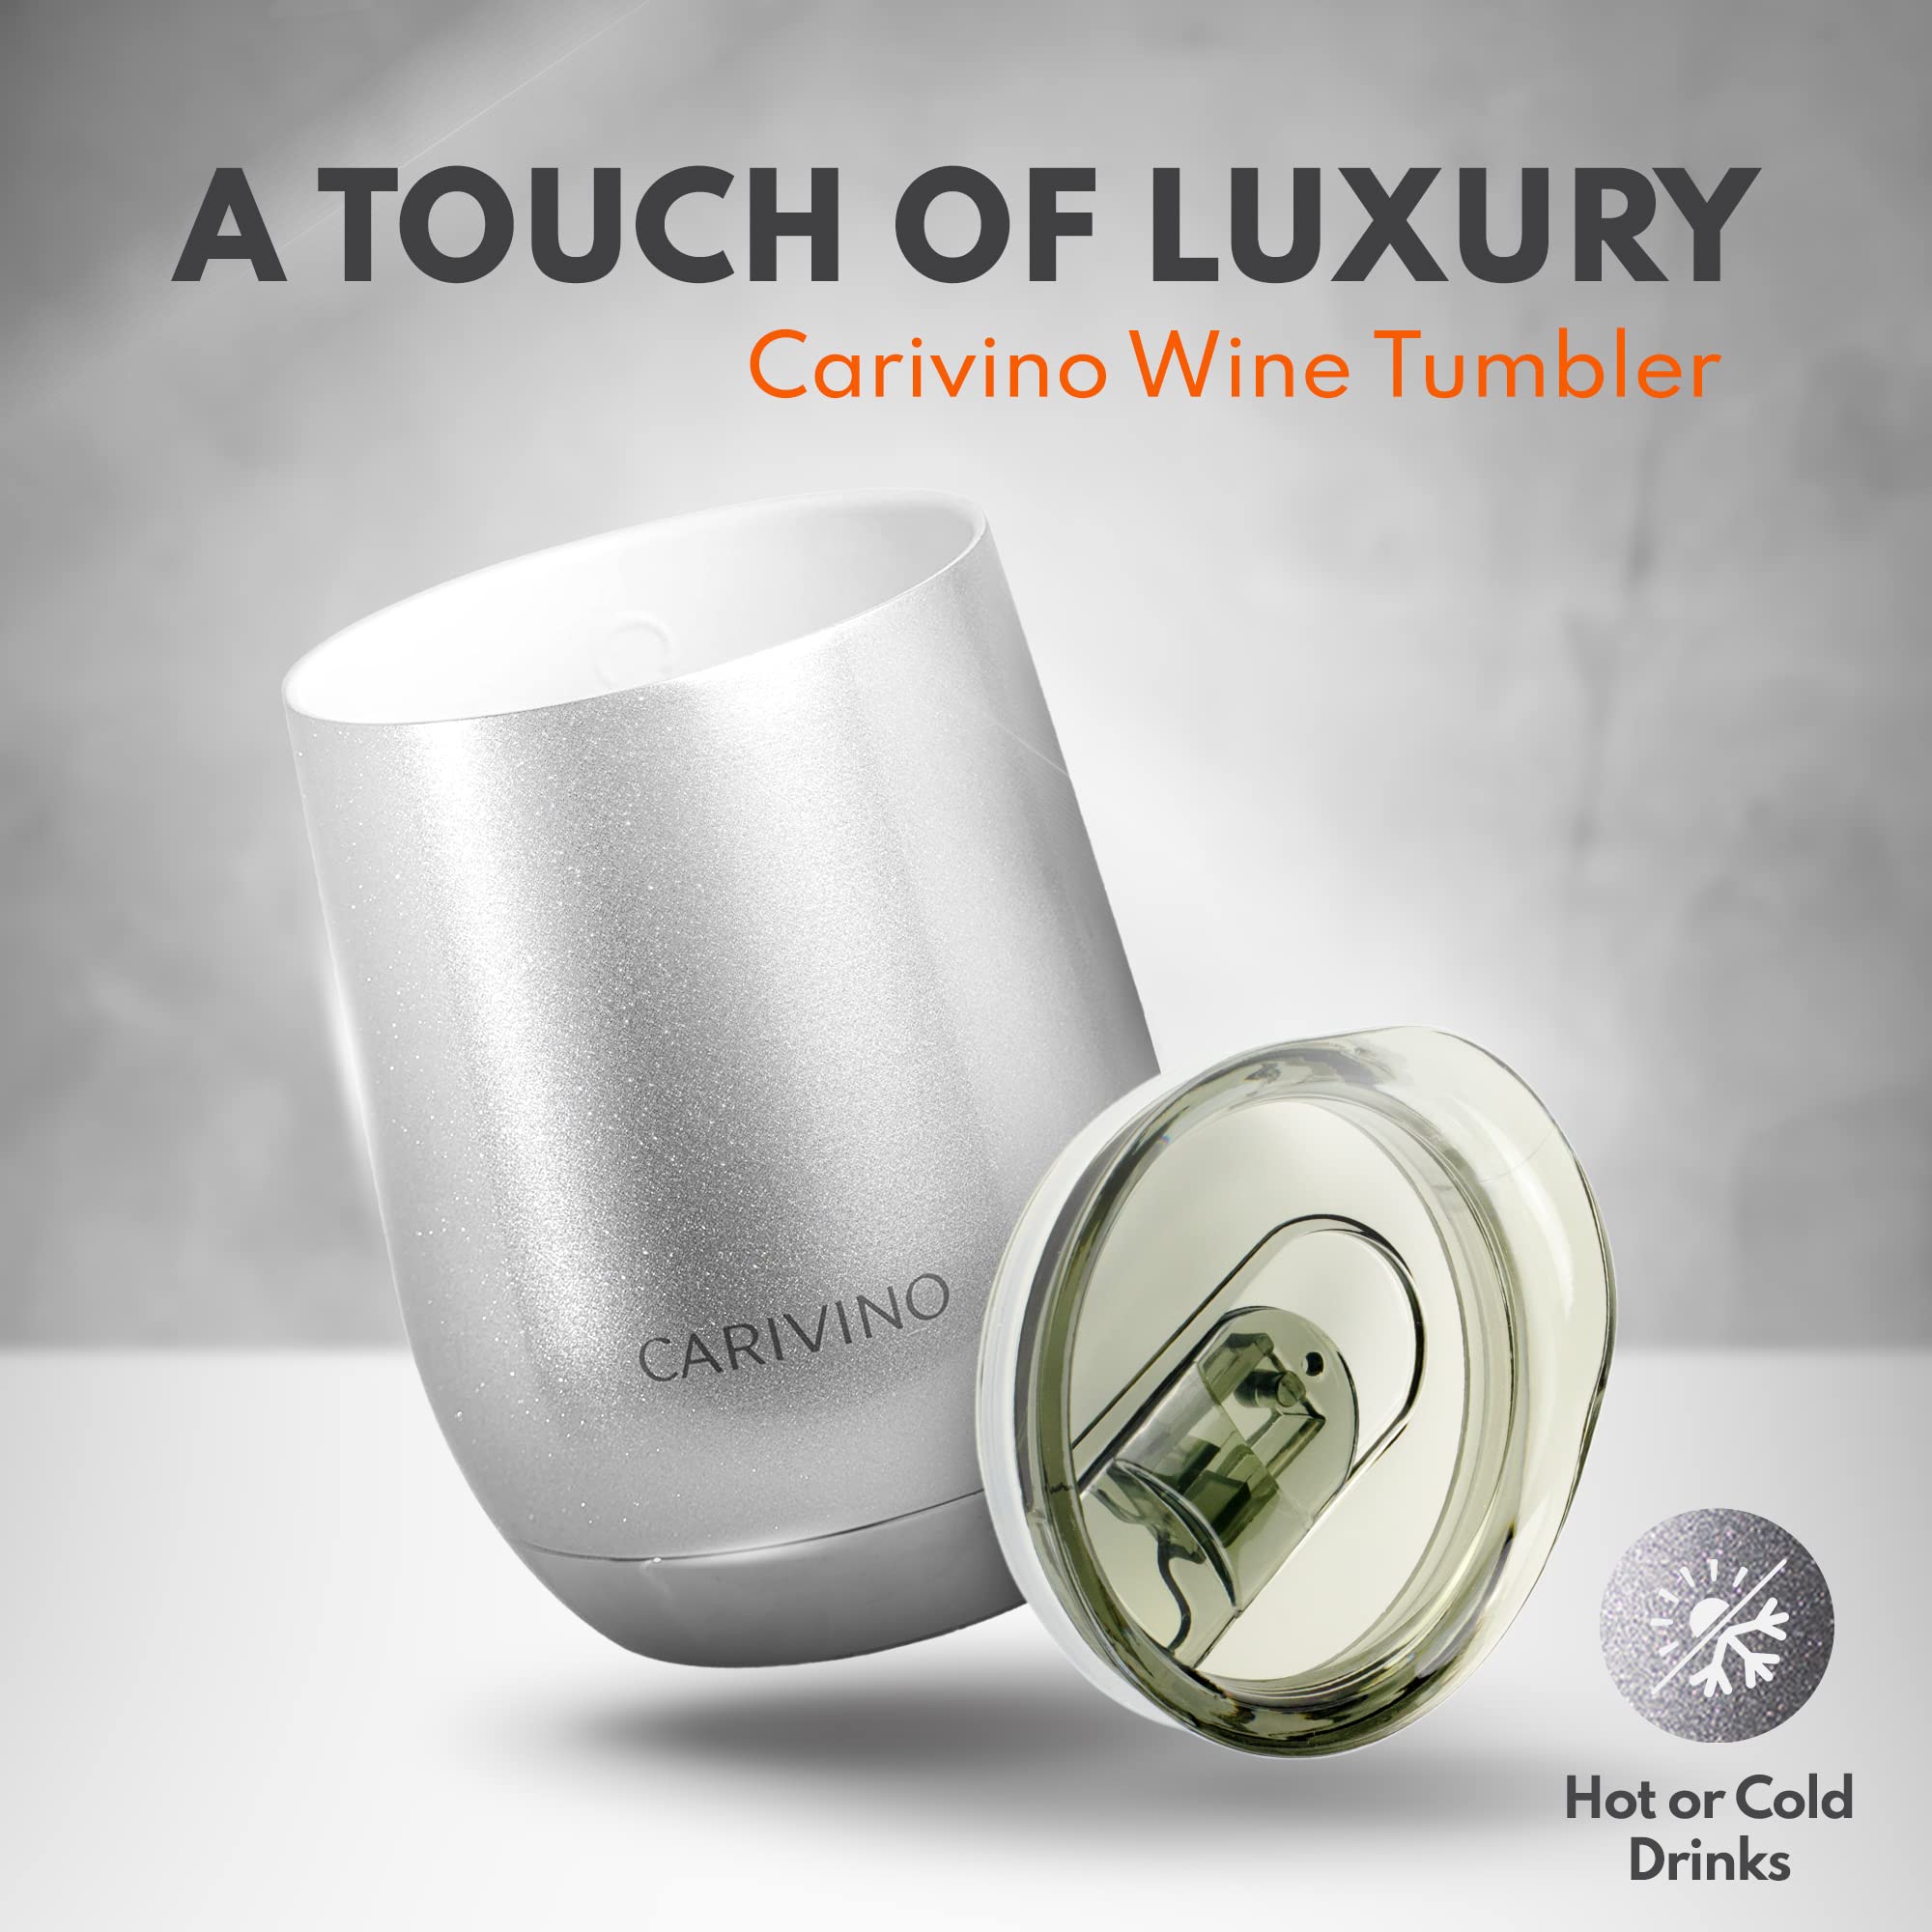 CARIVINO Luxury Wine Tumbler with Ceramic Interior, Genuine Cork Base & Tritan Lid, Advanced Vacuum Insulated Stainless Steel with Copper Coating and Premium Metallic/Pearl Finish, 12oz, Platinum